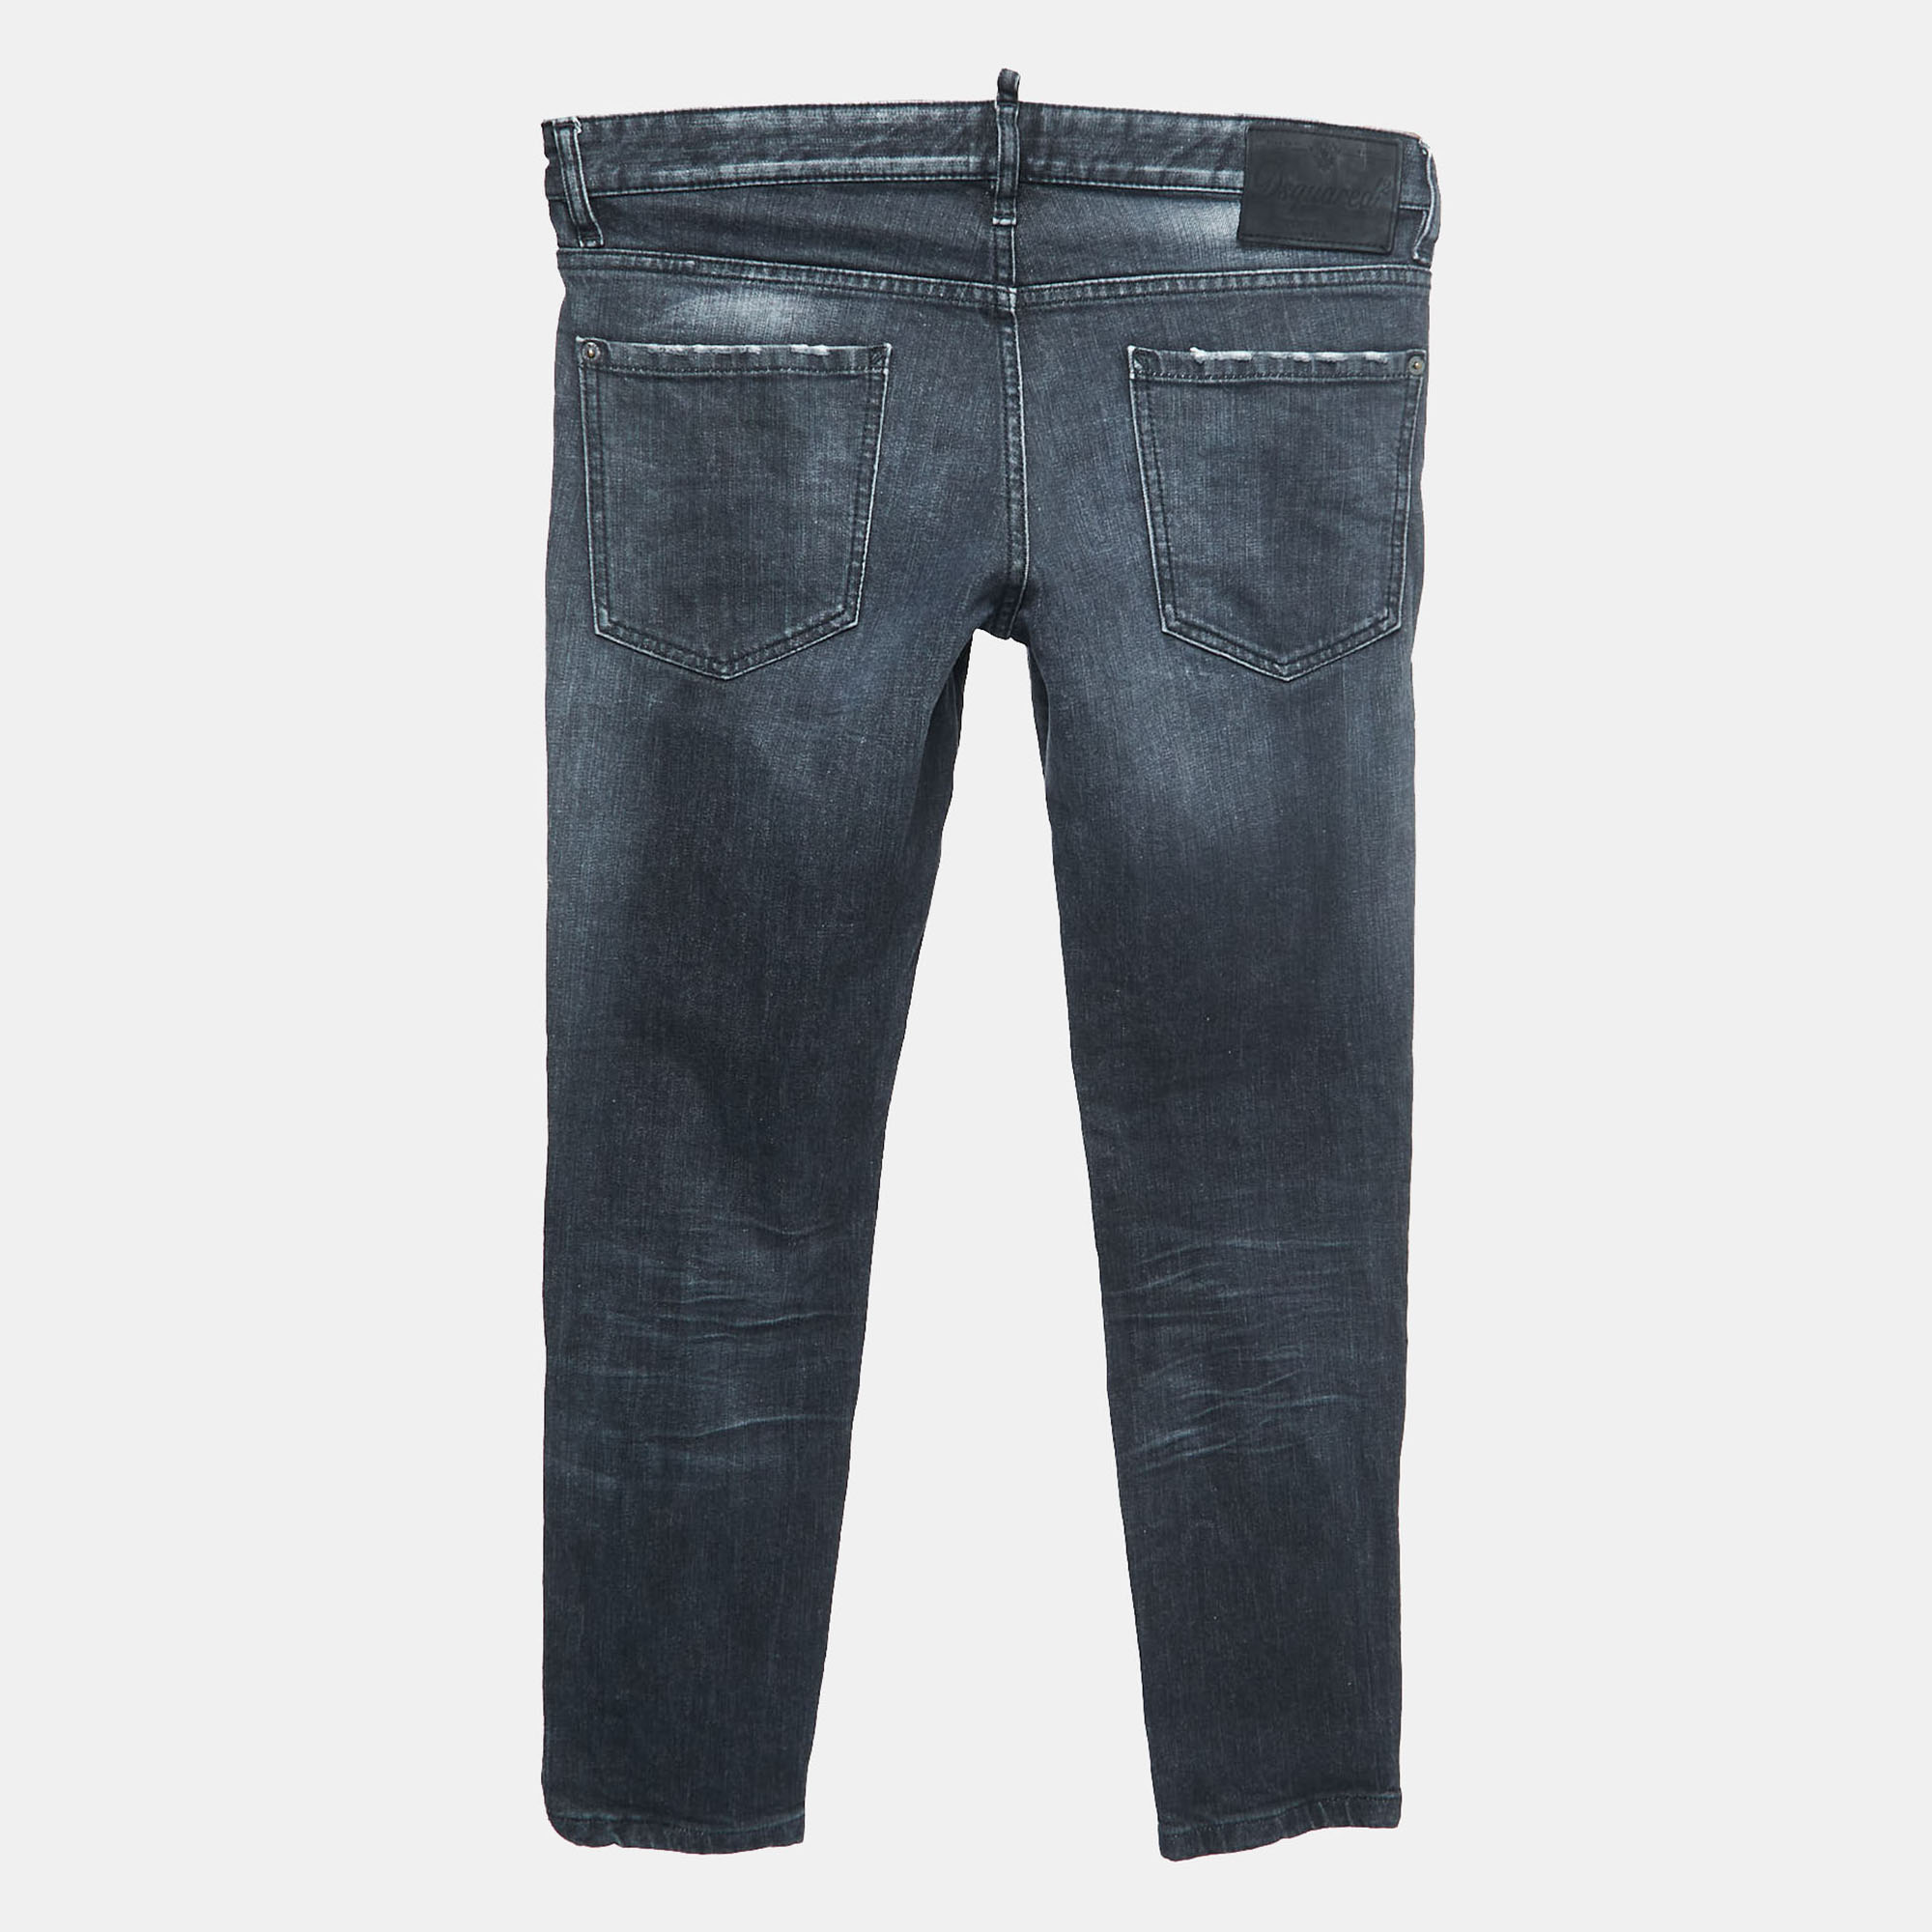 Pants Dsquared2 Grey Distressed Denim Skinny Jeans M Waist 34